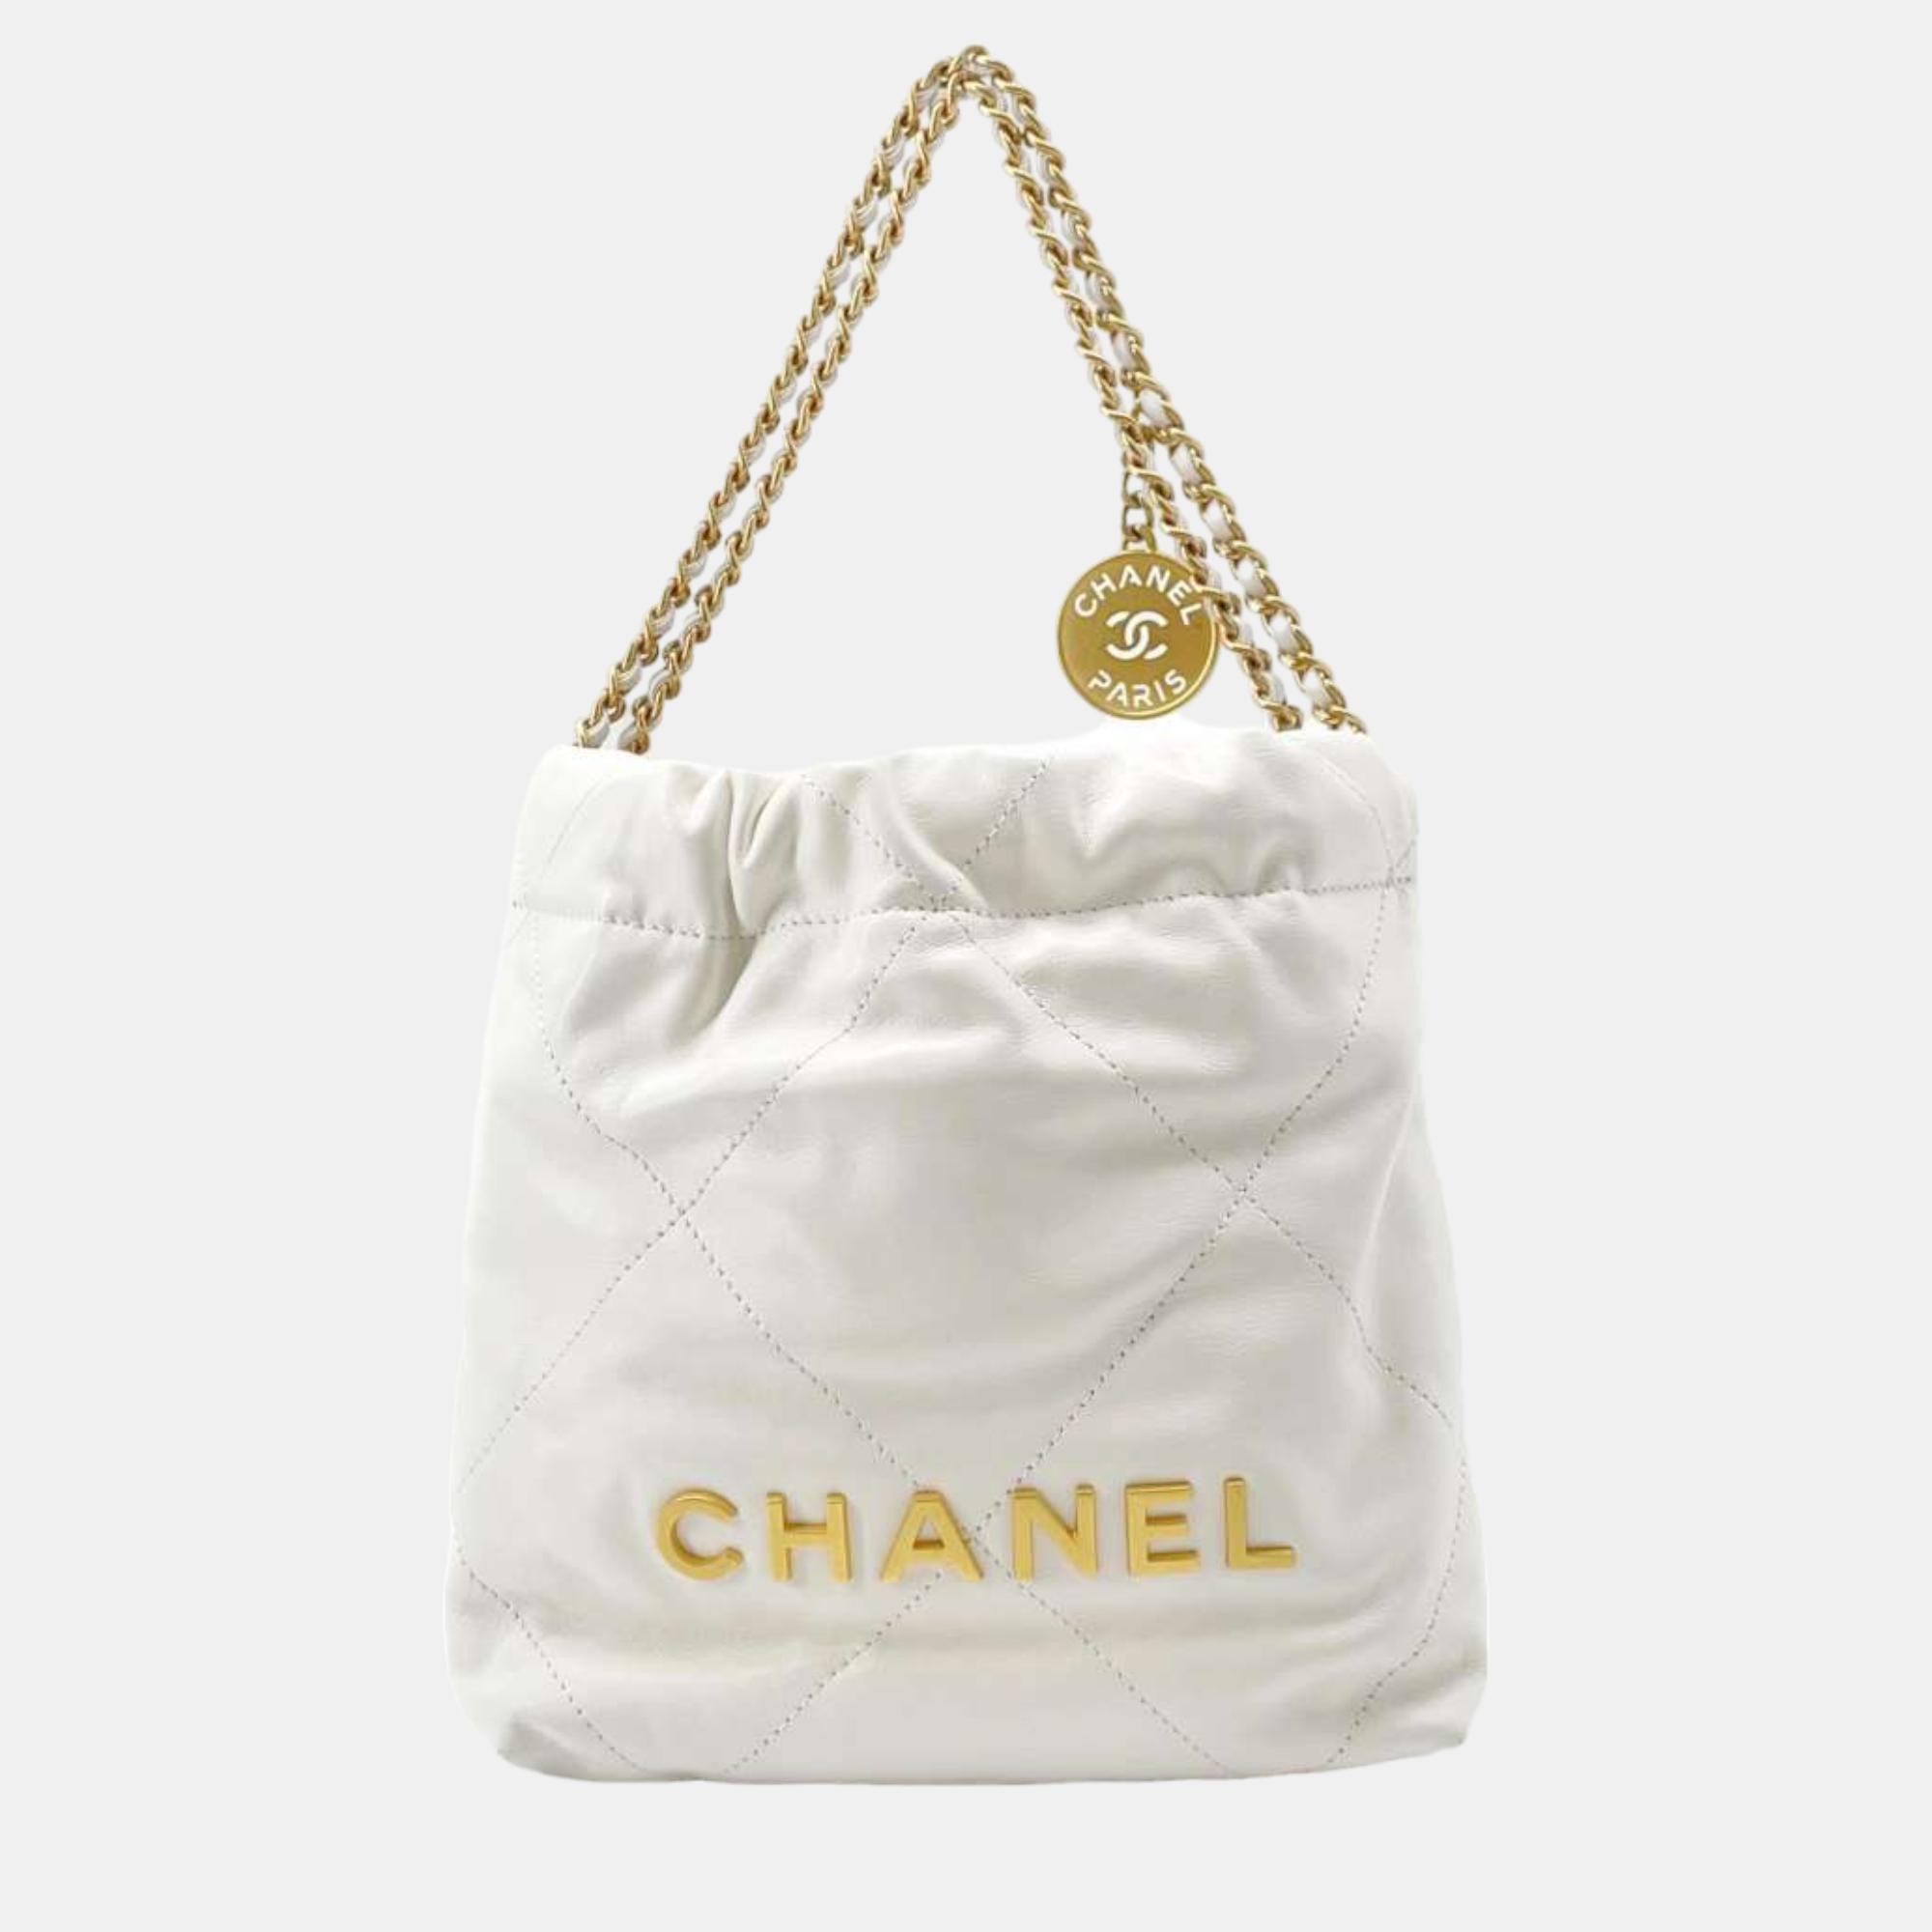 Chanel white shiny calf leather size mini handbag